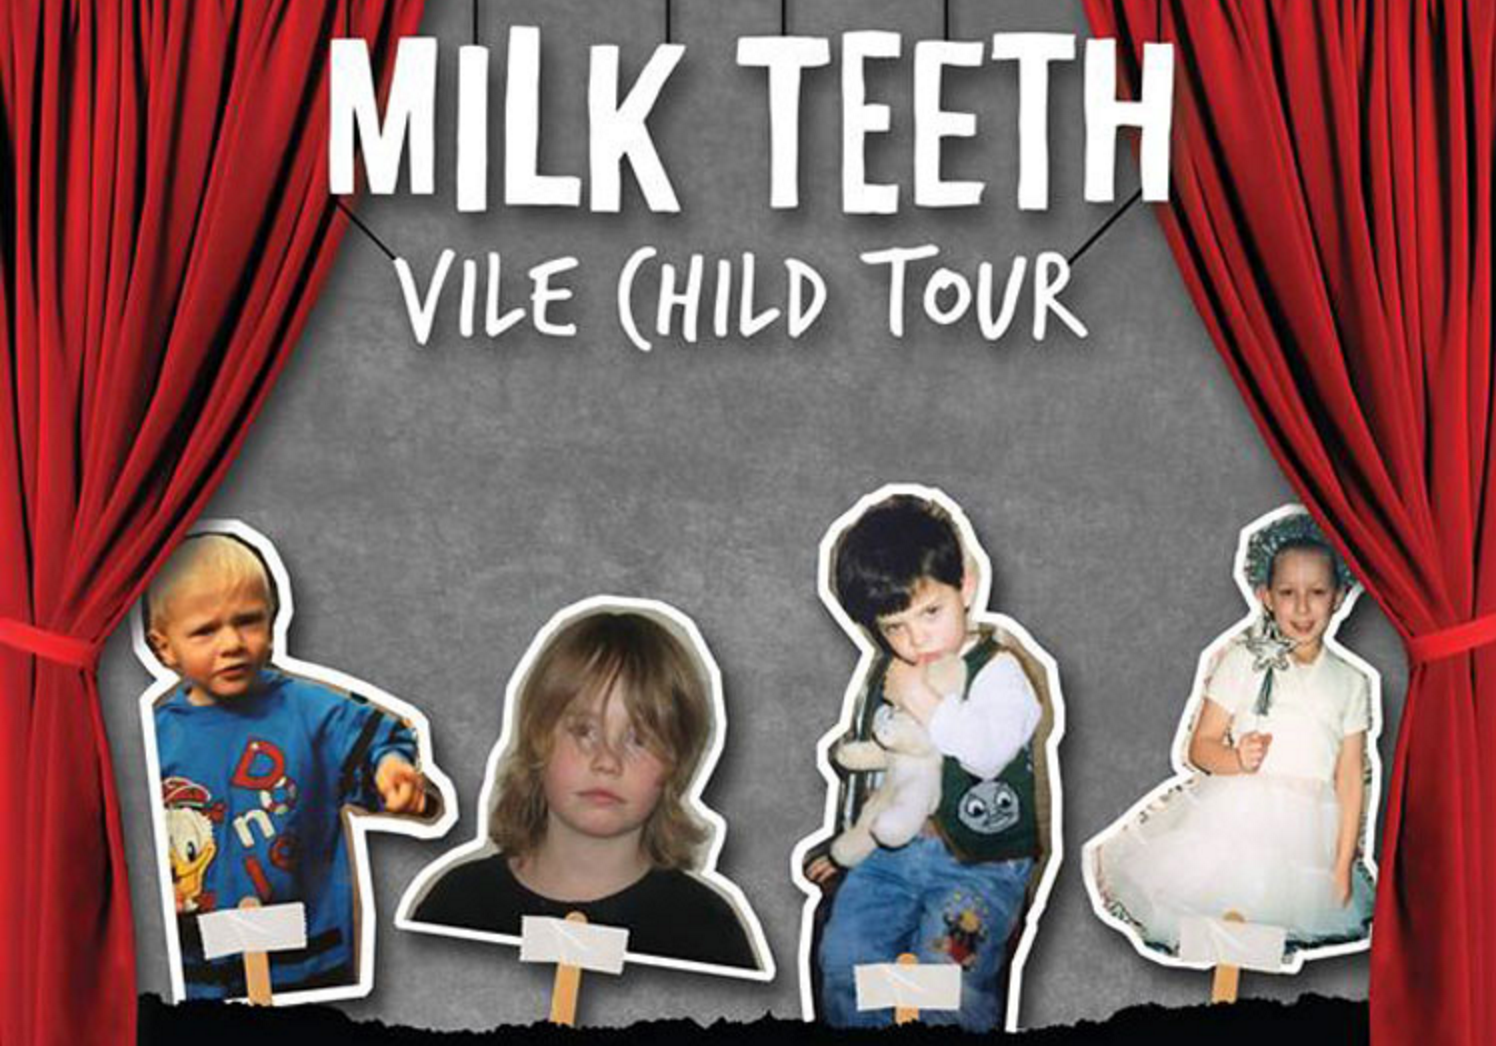 Milk Teeth Vile Child tour